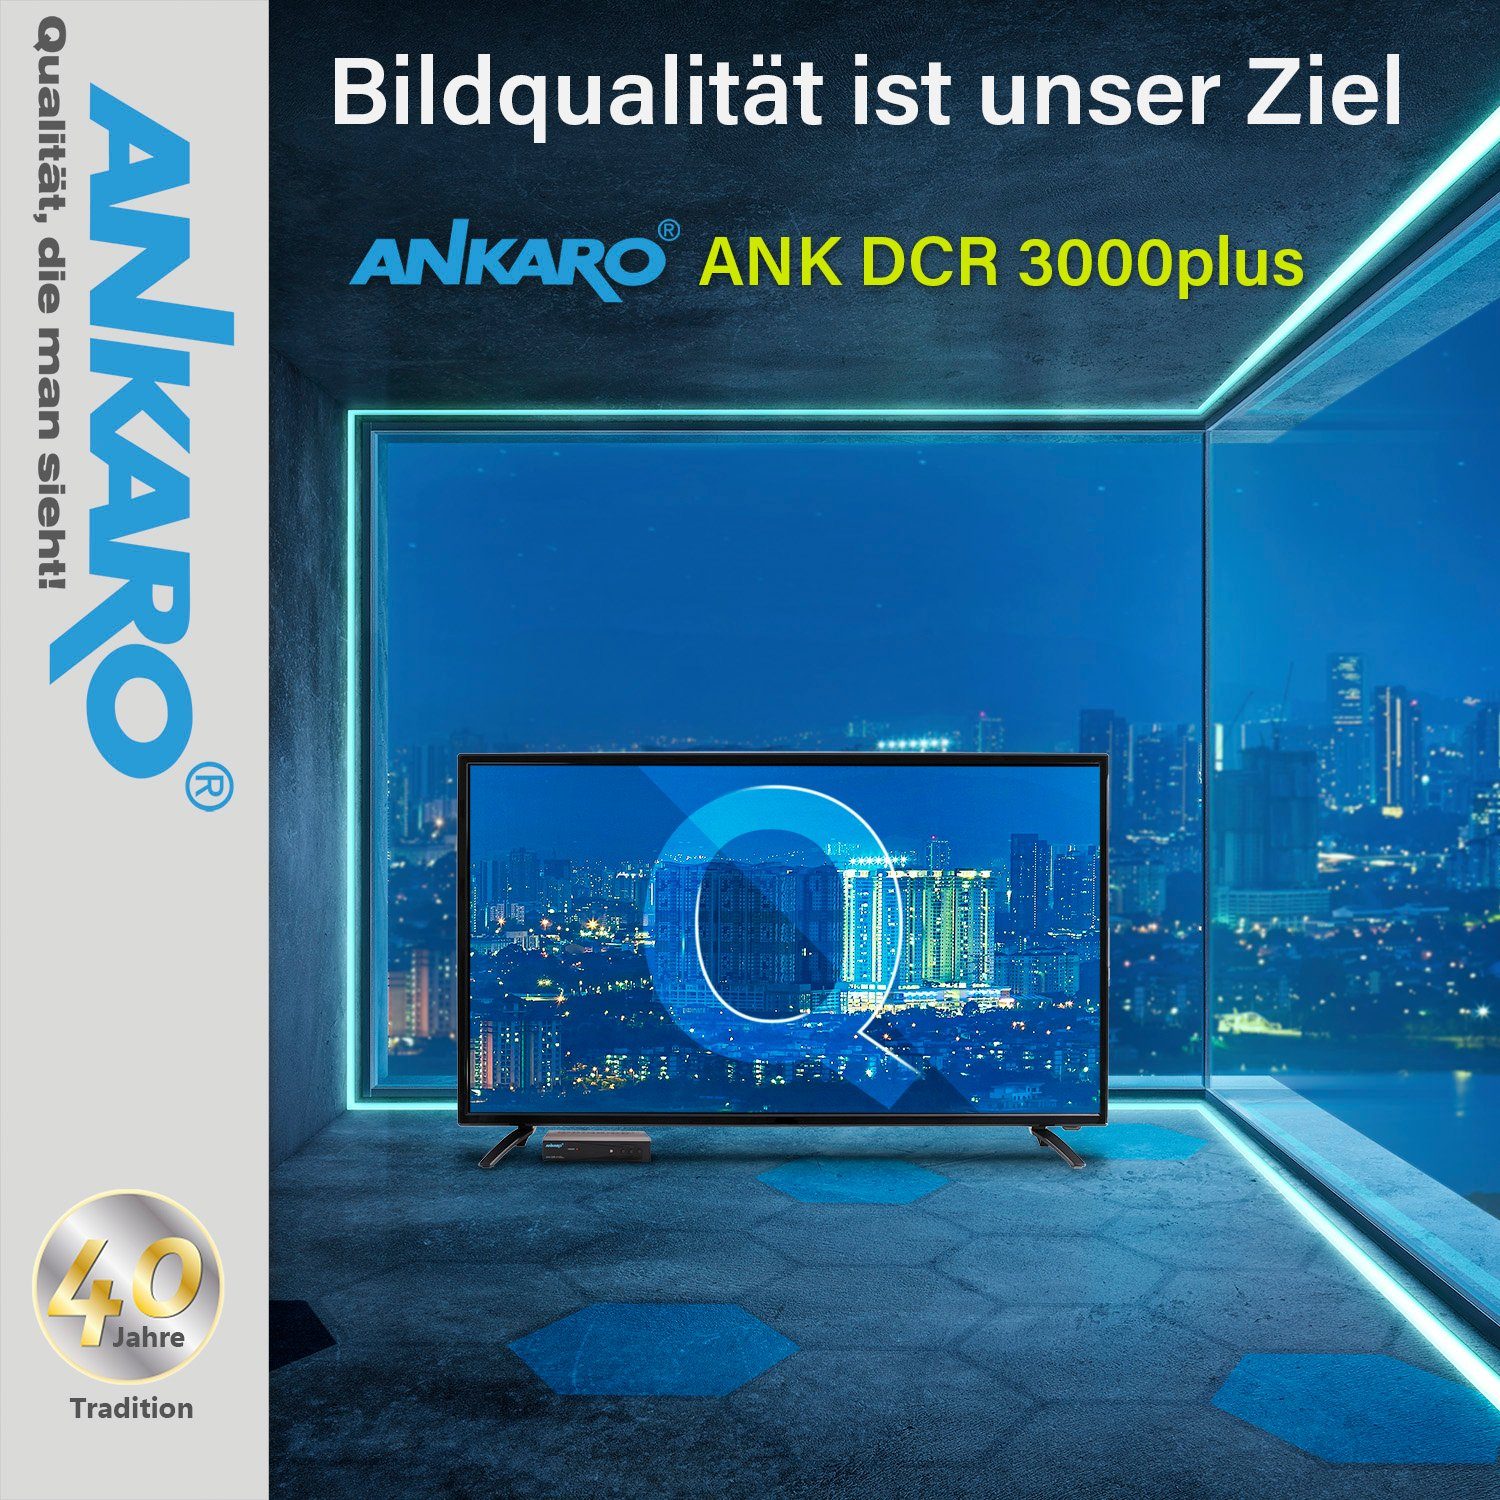 HD DVB-C Ankaro Full Mediaplayer, mit DCR - HDMI, 3000 Kabel-Receiver Aufnahmefunktion Coaxial, (HDTV, PVR) Plus USB, Scart,